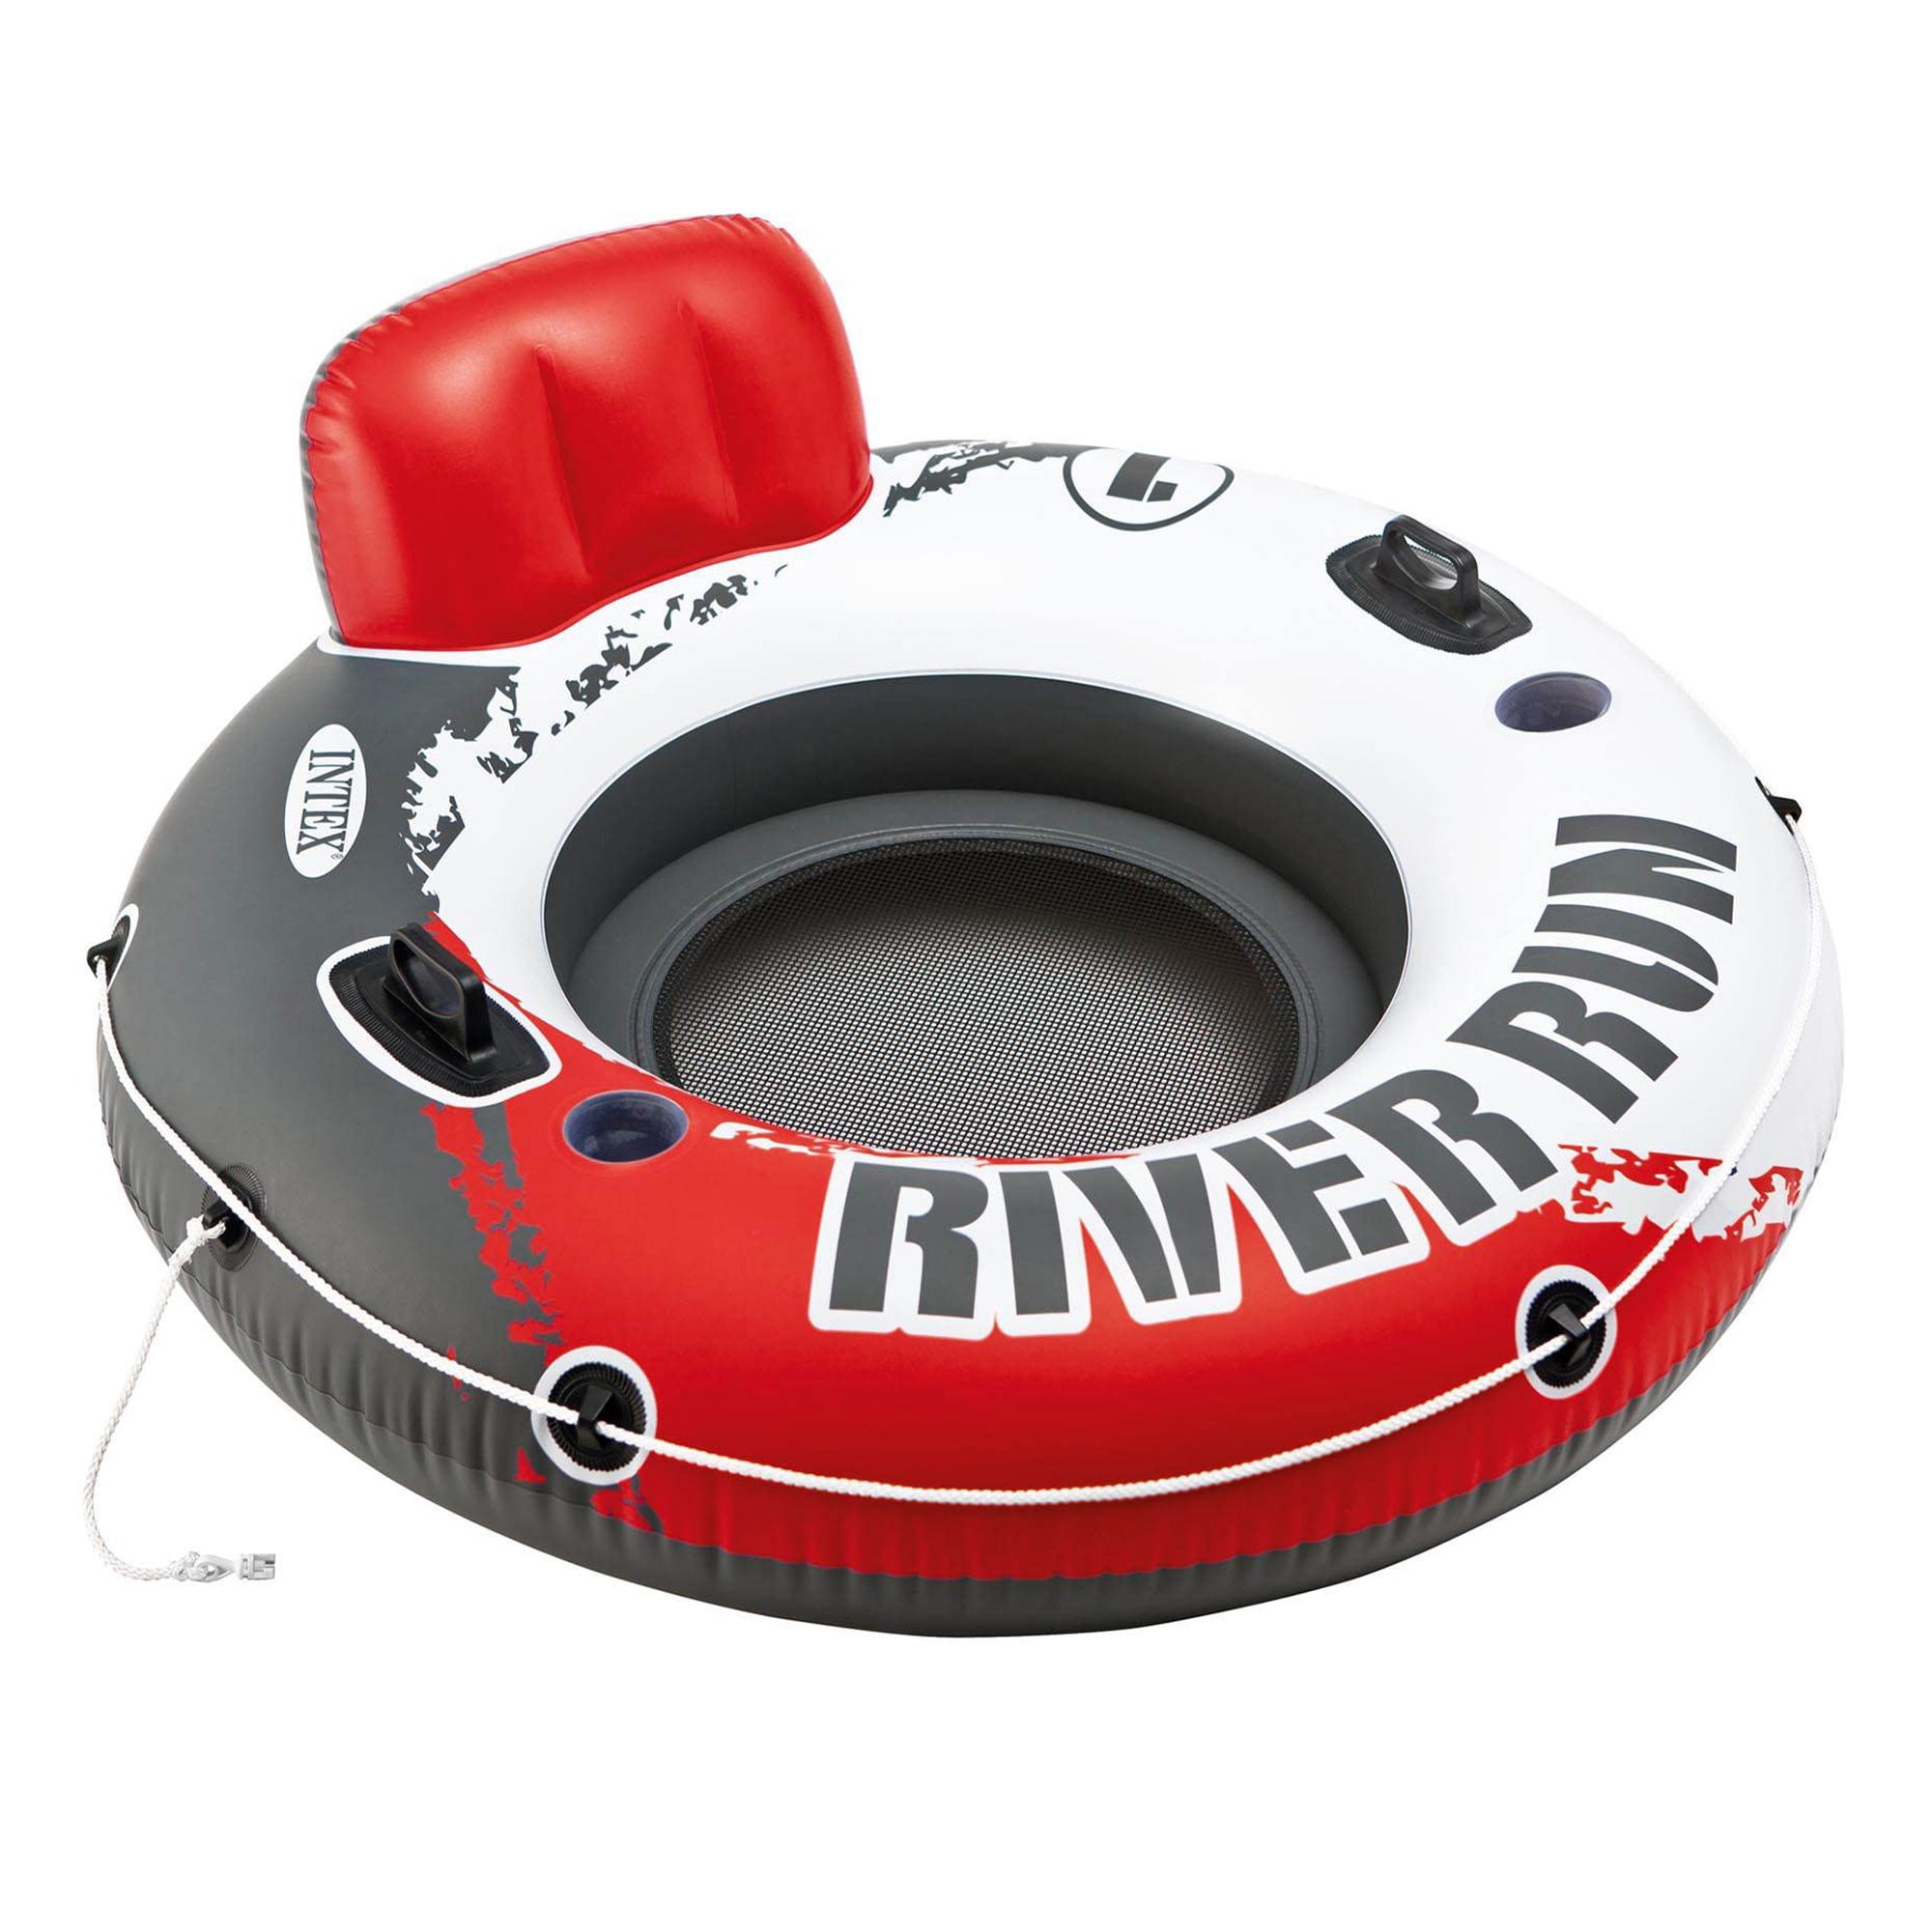 Intex River Run 1 53 Inflatable Floating Water Tube Lake Raft